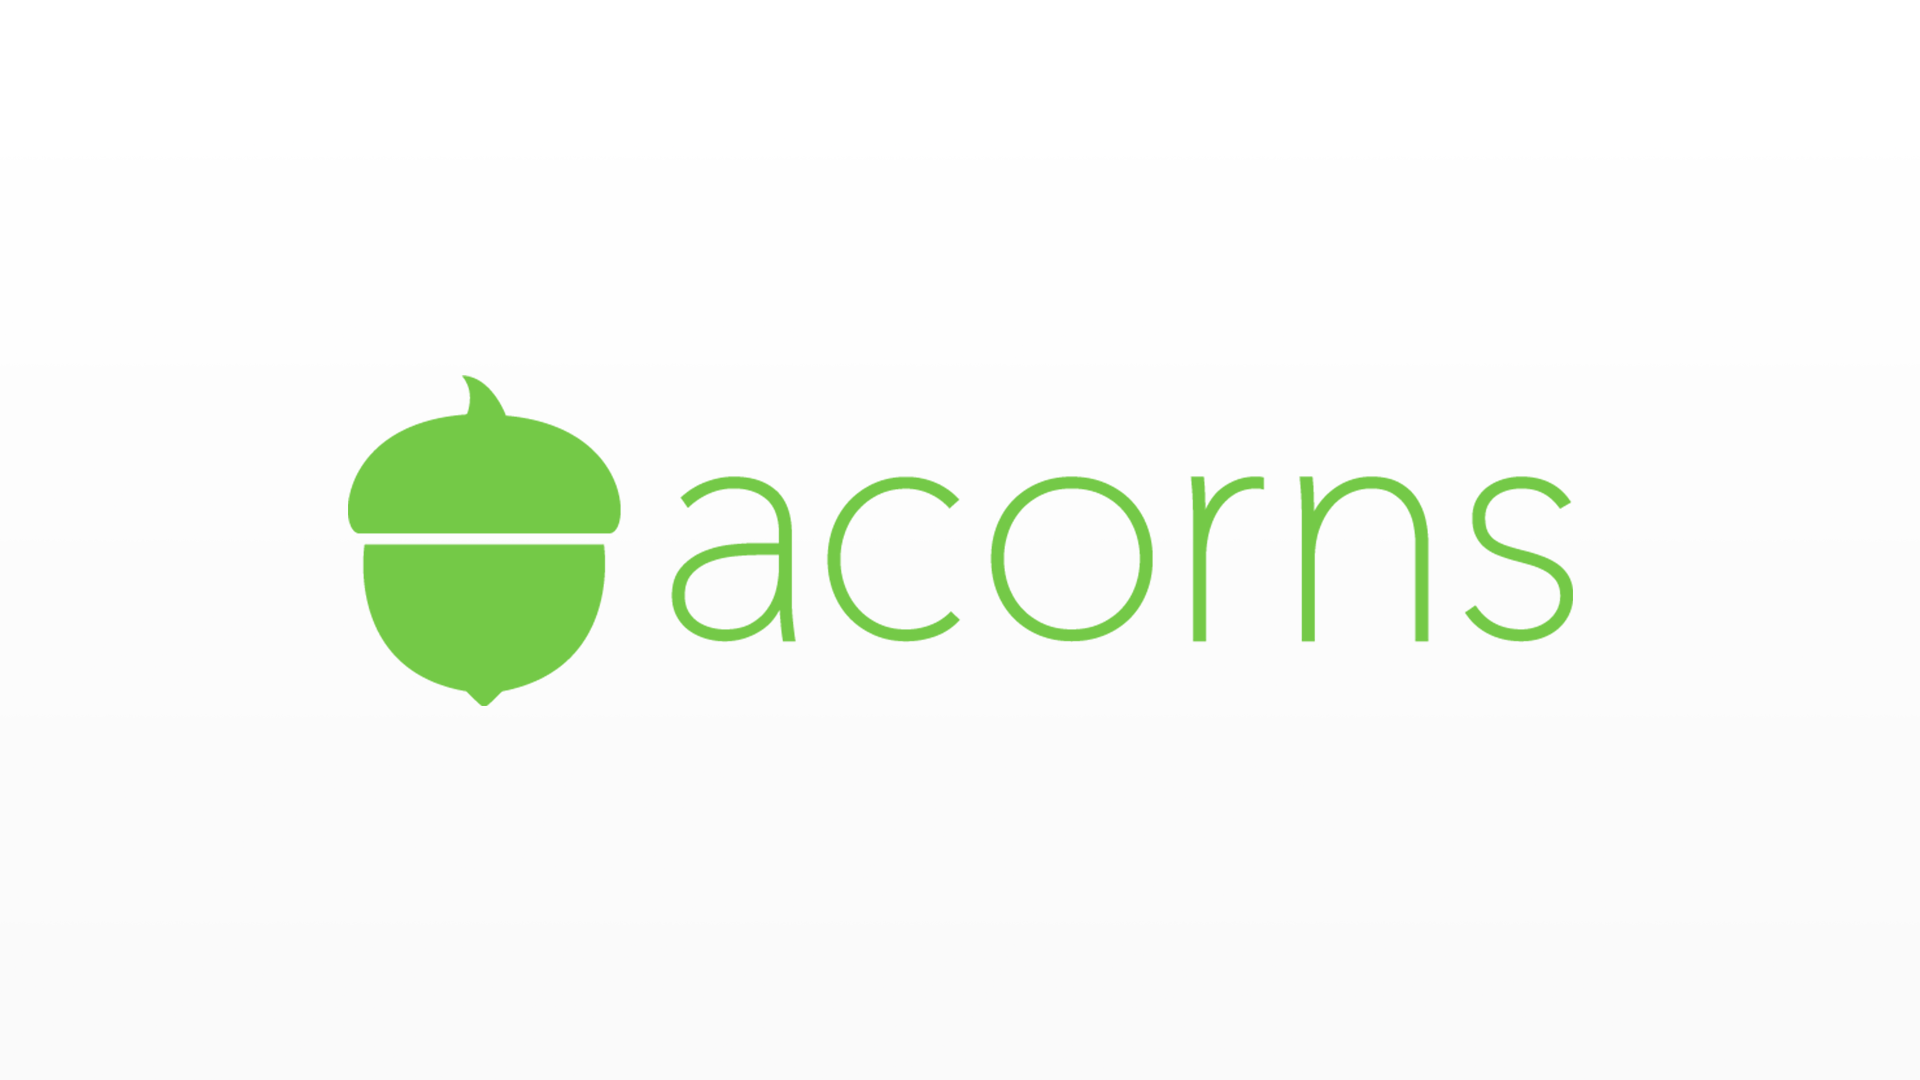 Acorns Review